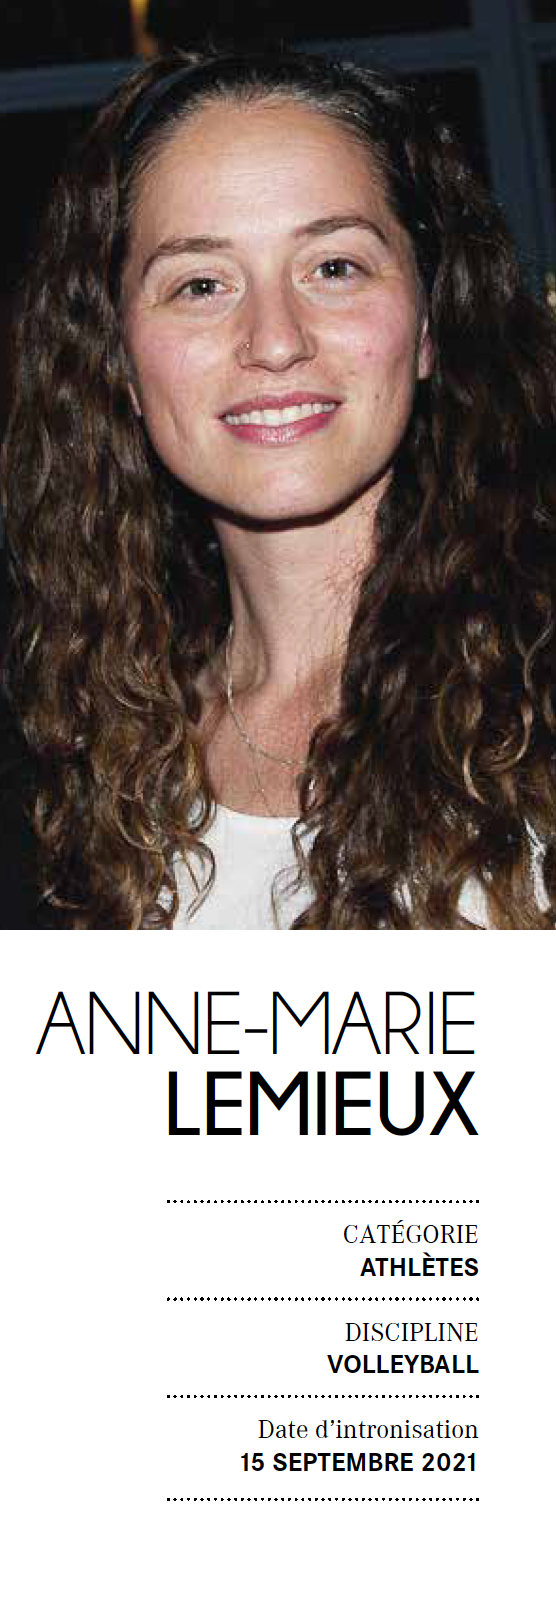 Anne-Marie Lemieux